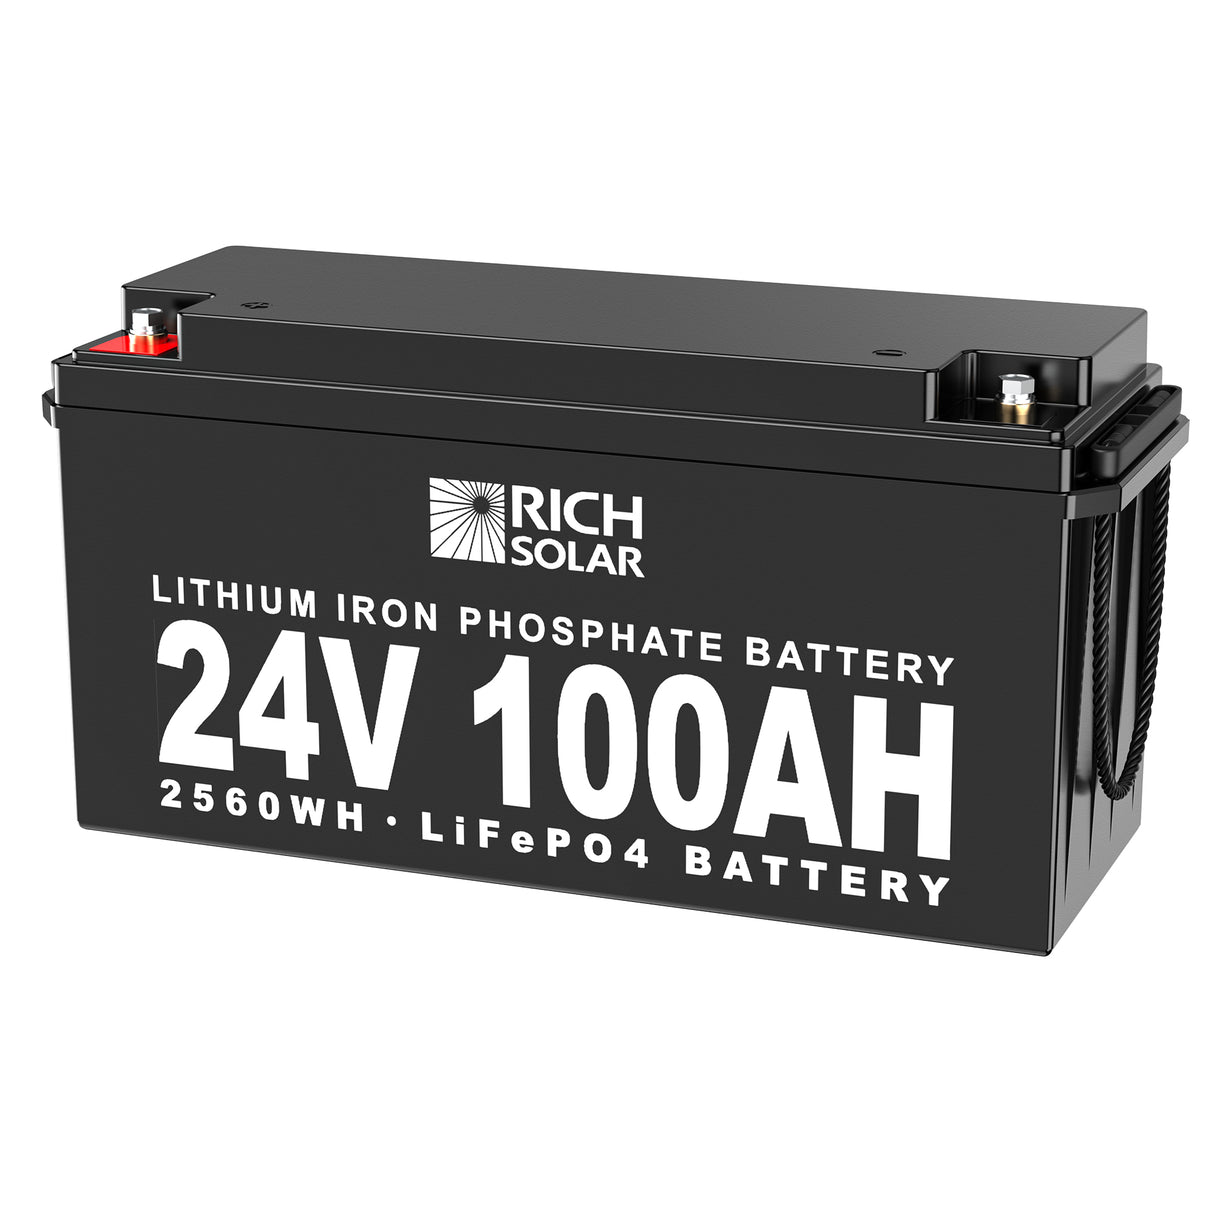 24V 100Ah LiFePO4 Lithium Iron Phosphate Battery